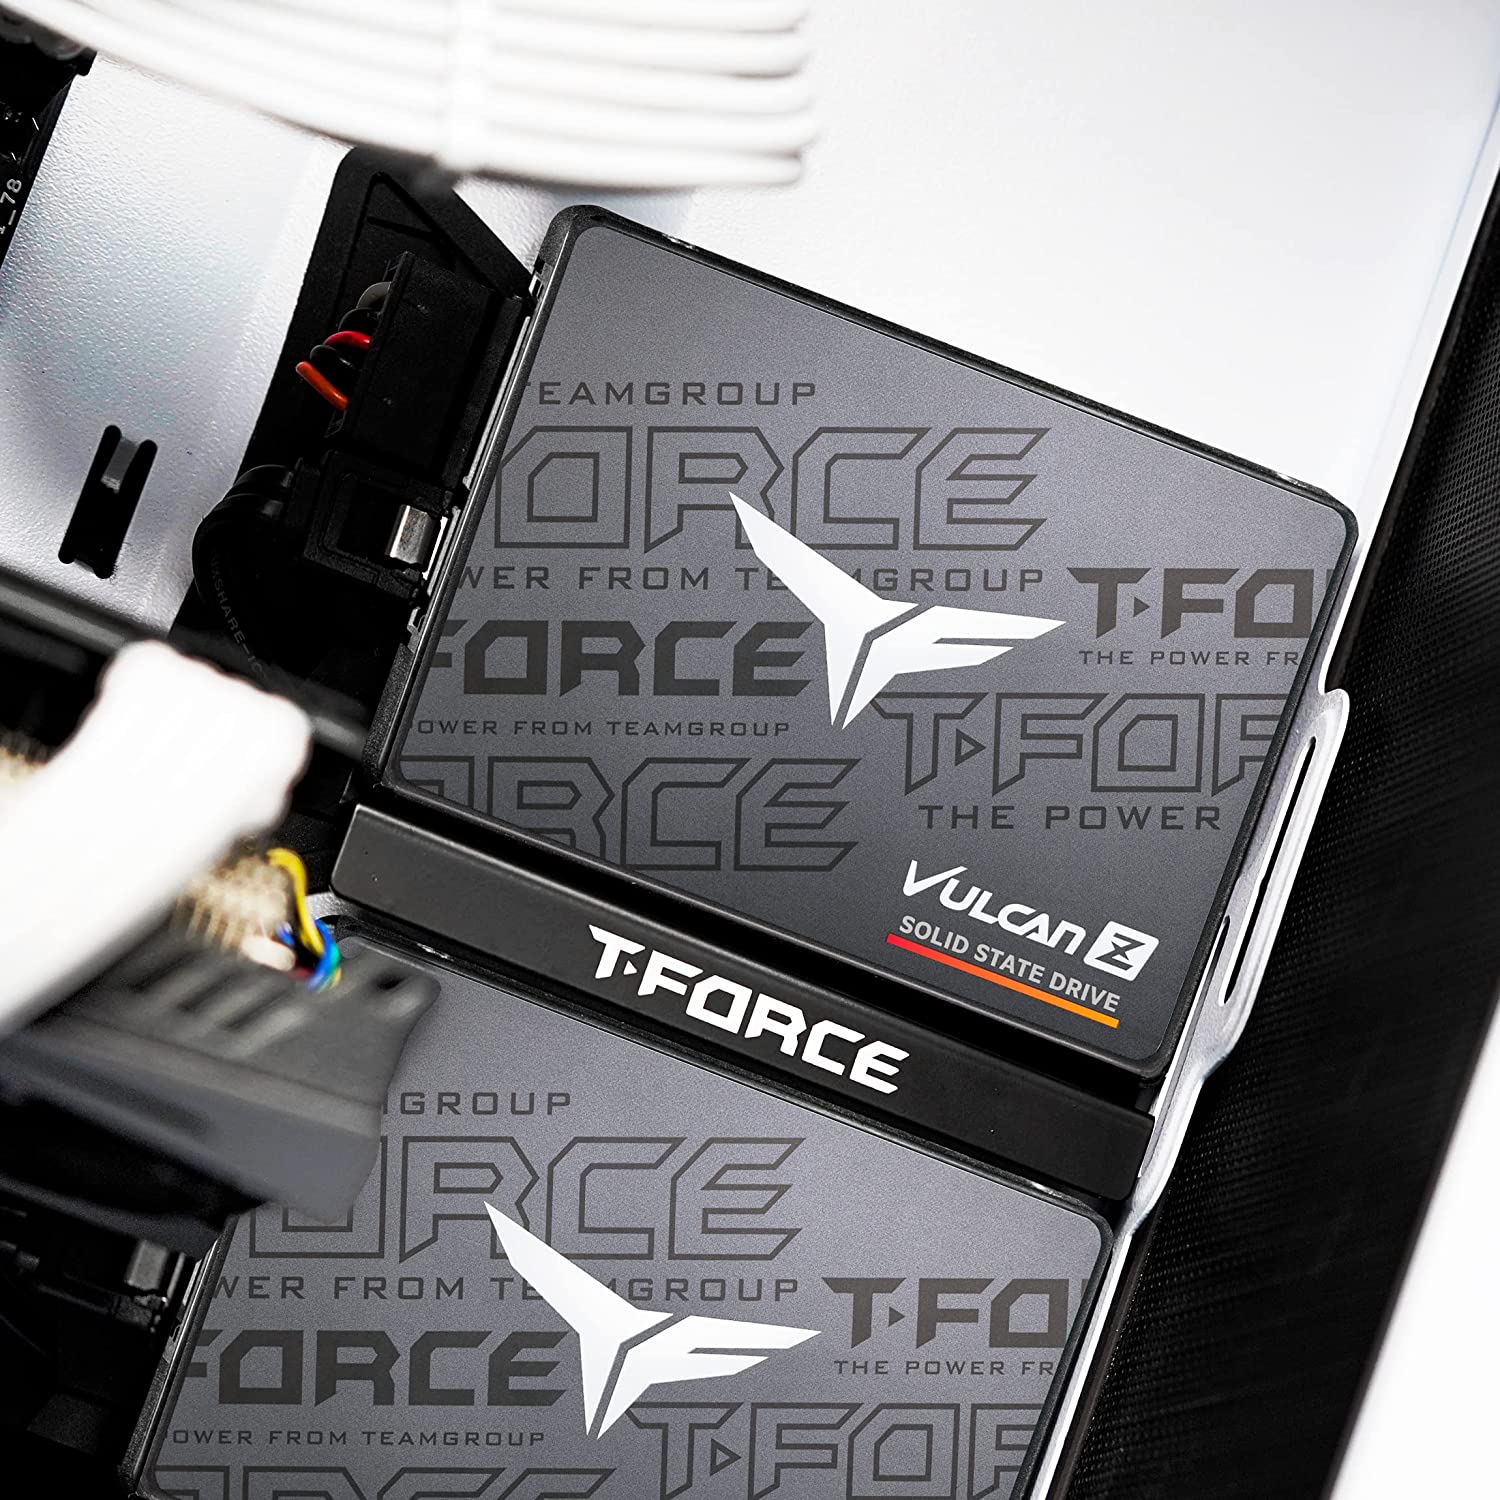 TEAMGROUP T-FORCE VULCAN Z 512GB 2.5" SSD-SSD-Makotek Computers